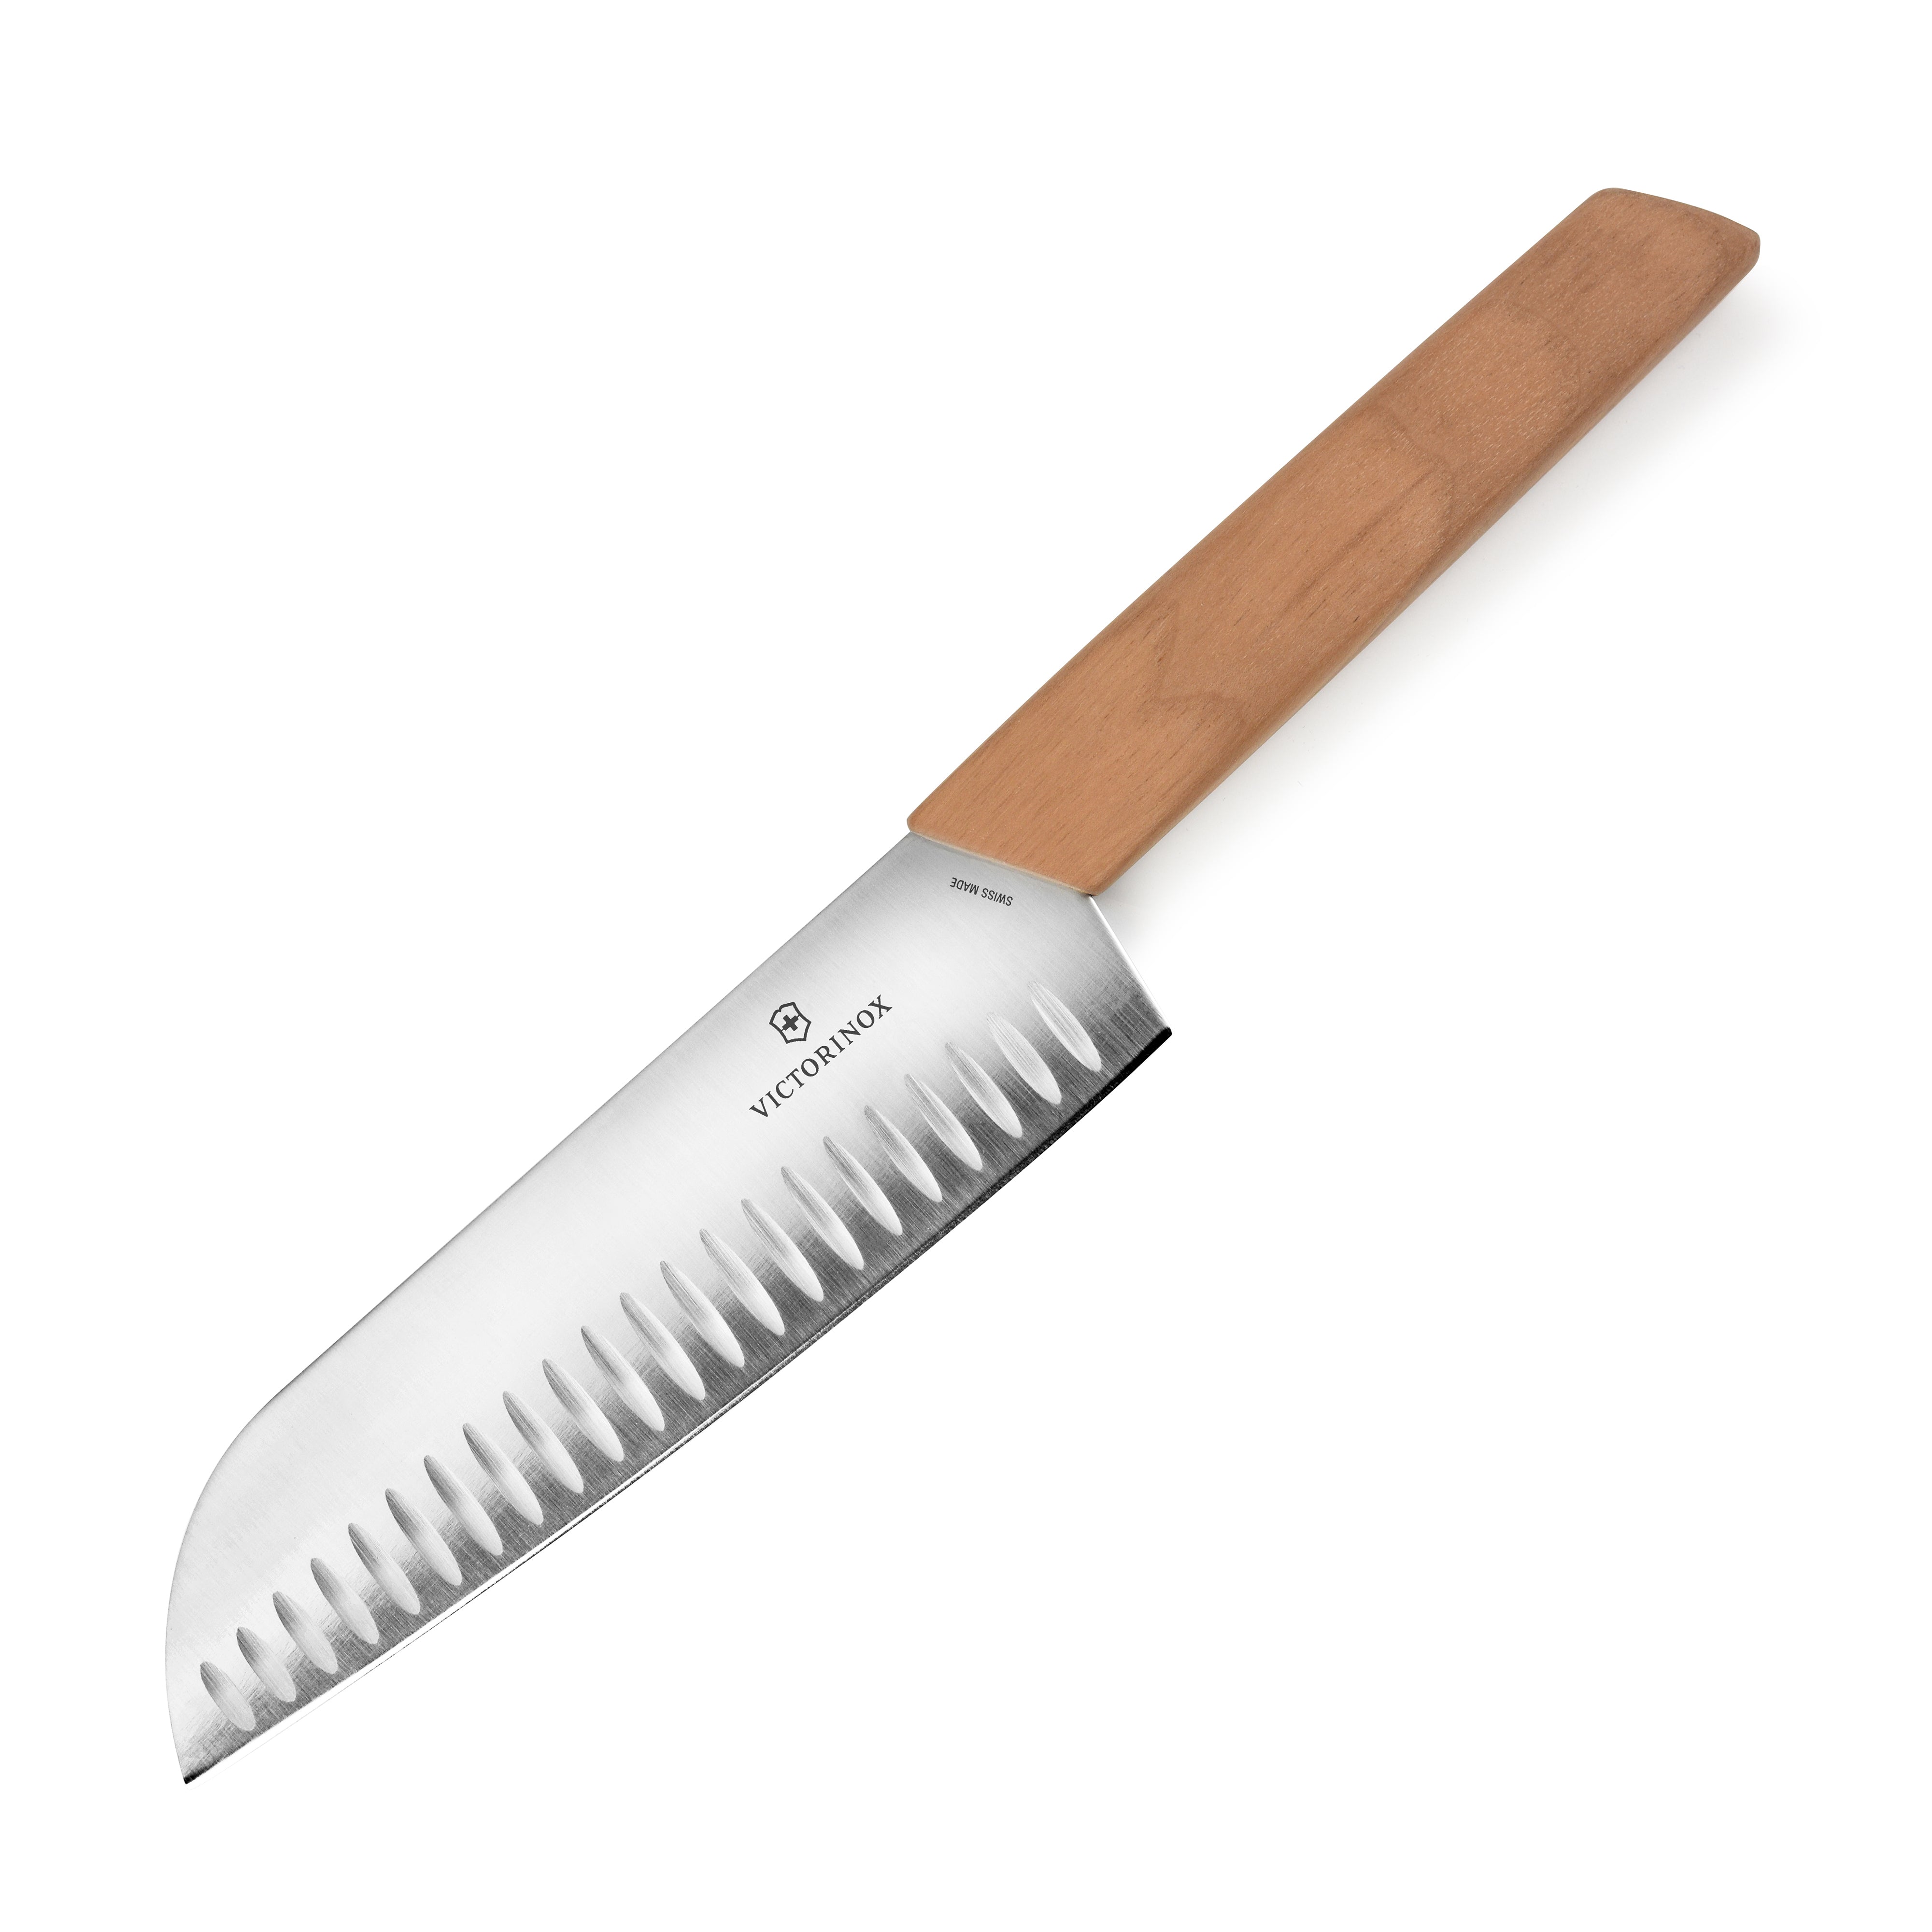 Victorinox Knife Set Review 2023